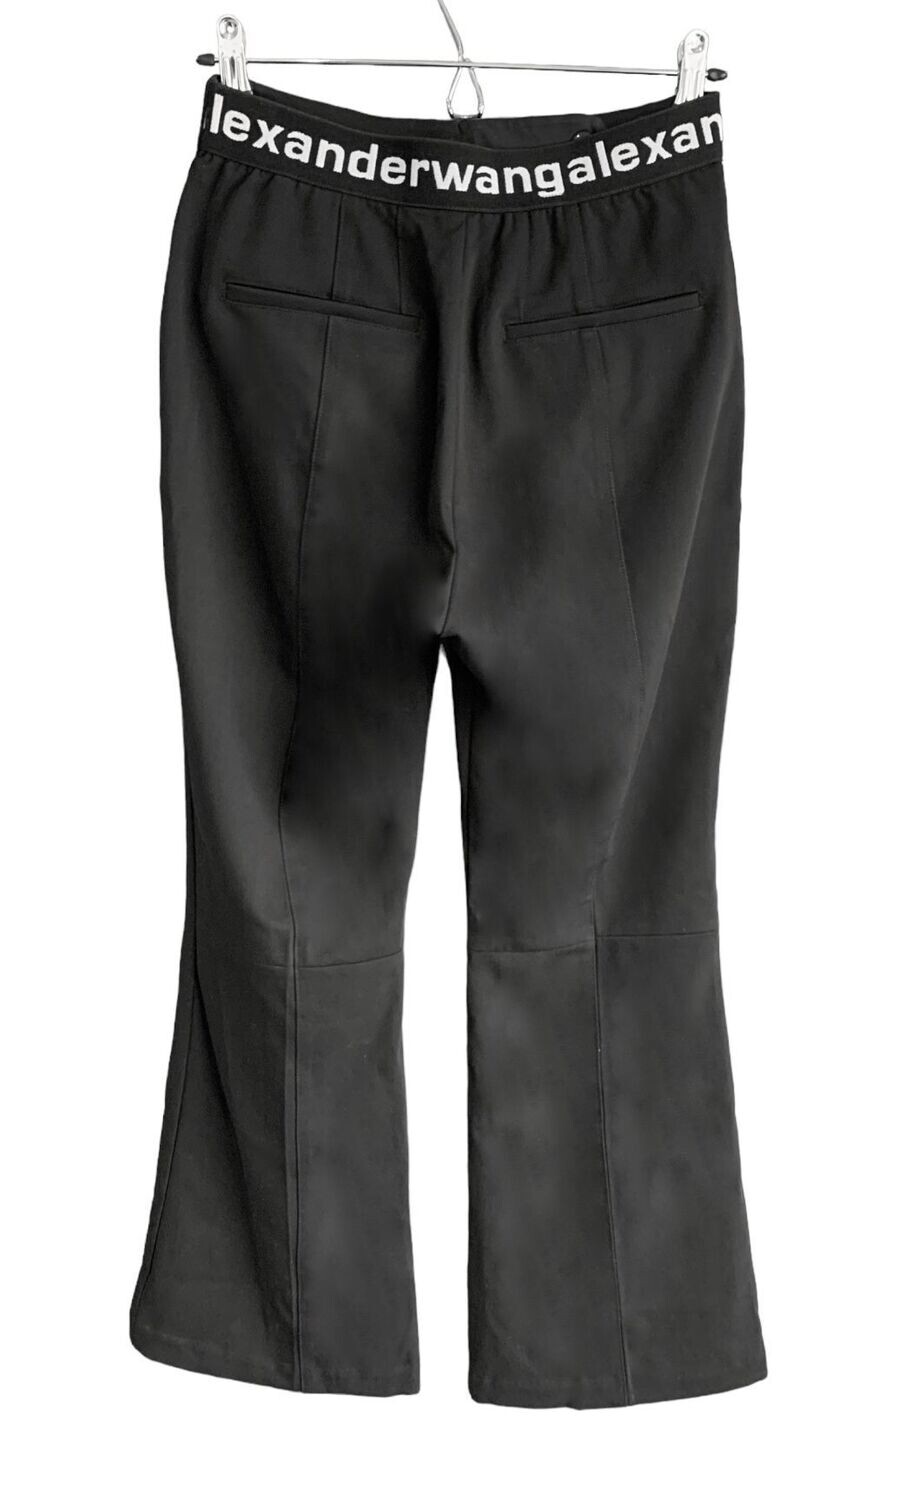 Alexander Wang Branded Waitsband Trousers UK 6/8